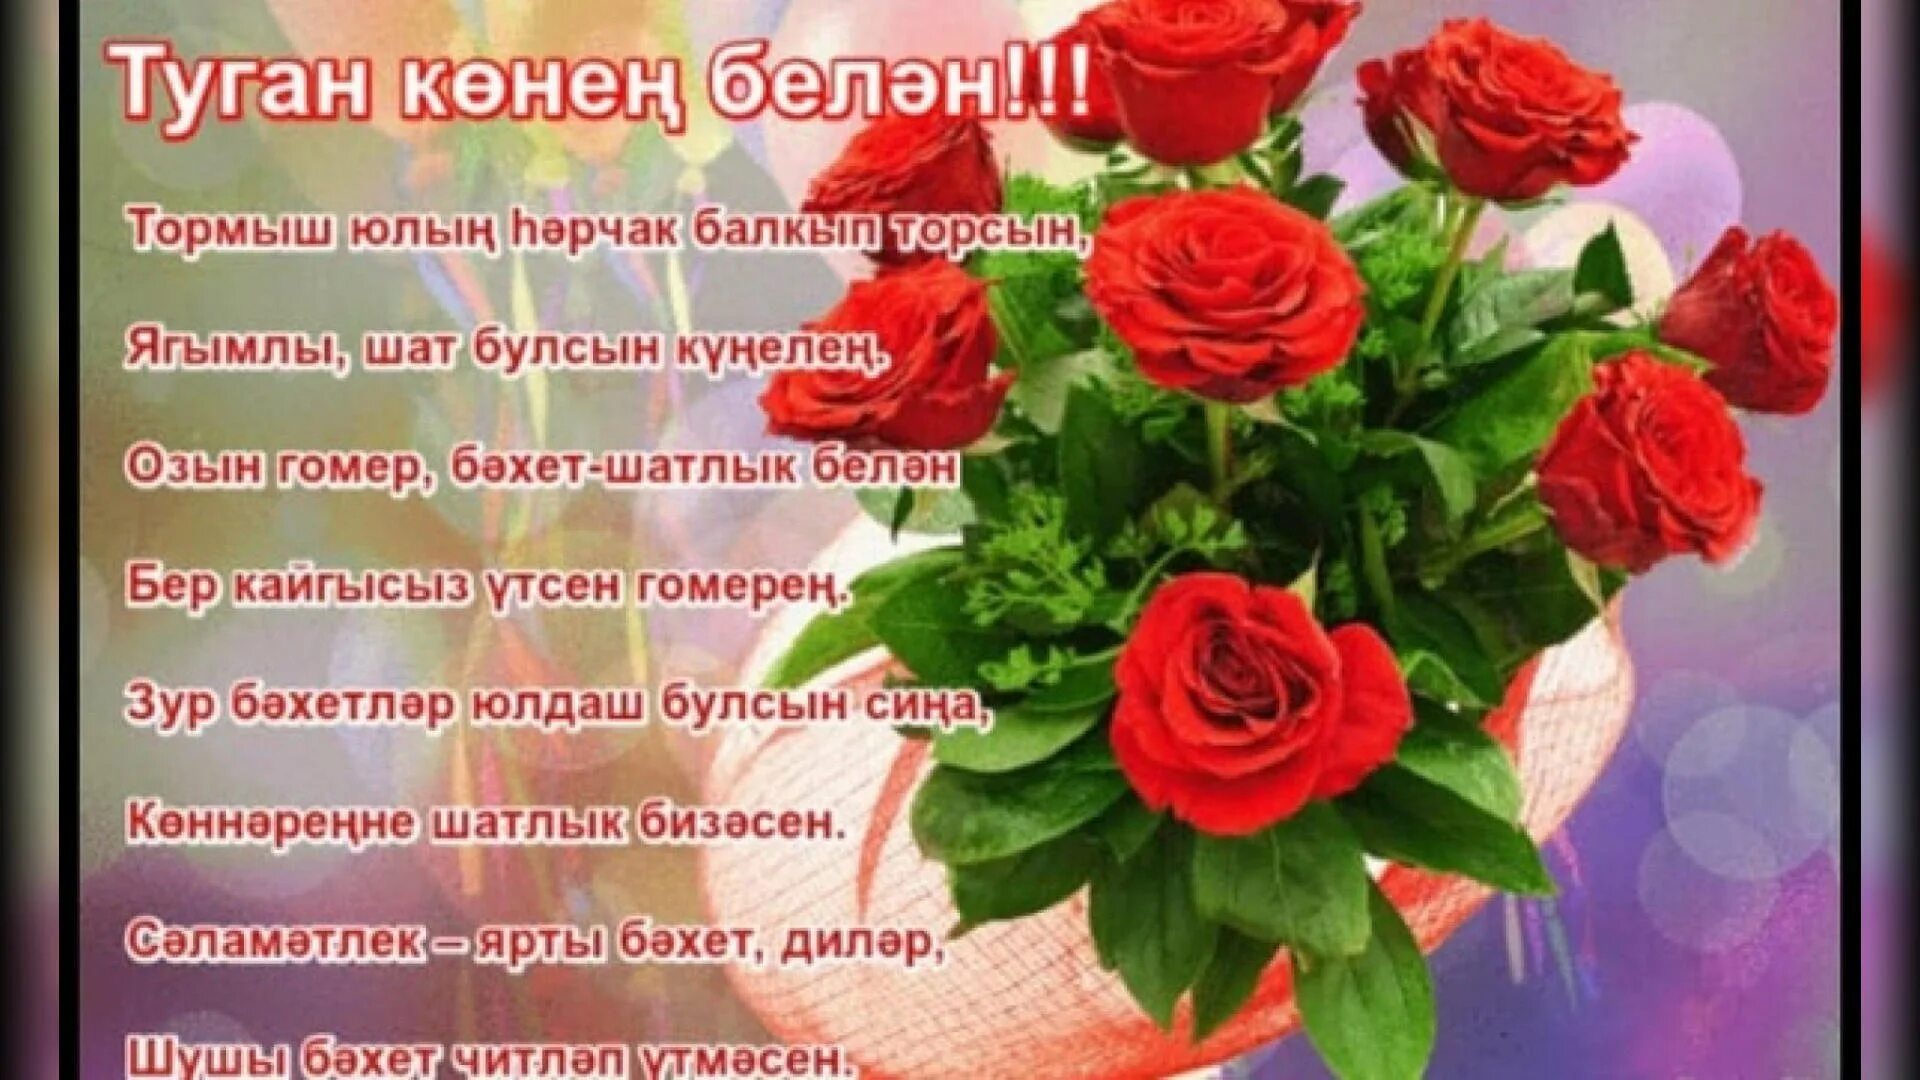 Апаны туган конен. Татарские поздравления с днем рождения. Поздравления с днём рождения на татарском языке. Поздравления с днём рождения женщине на татарском языке. Поздравления с днём рождения женщине на татарском.